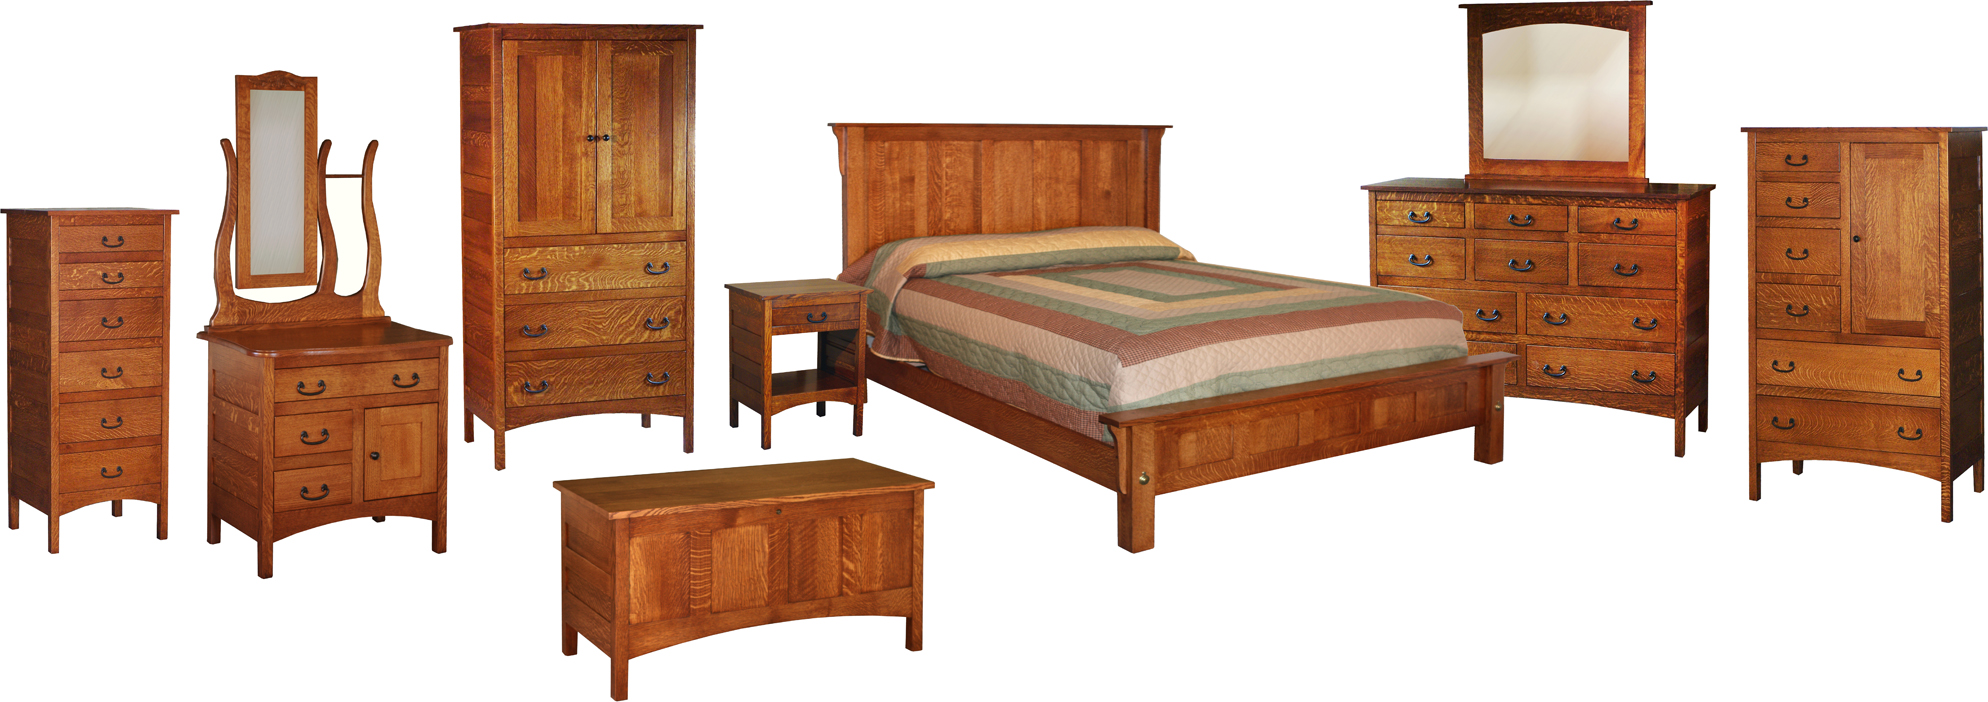 amish bedroom furniture for sale